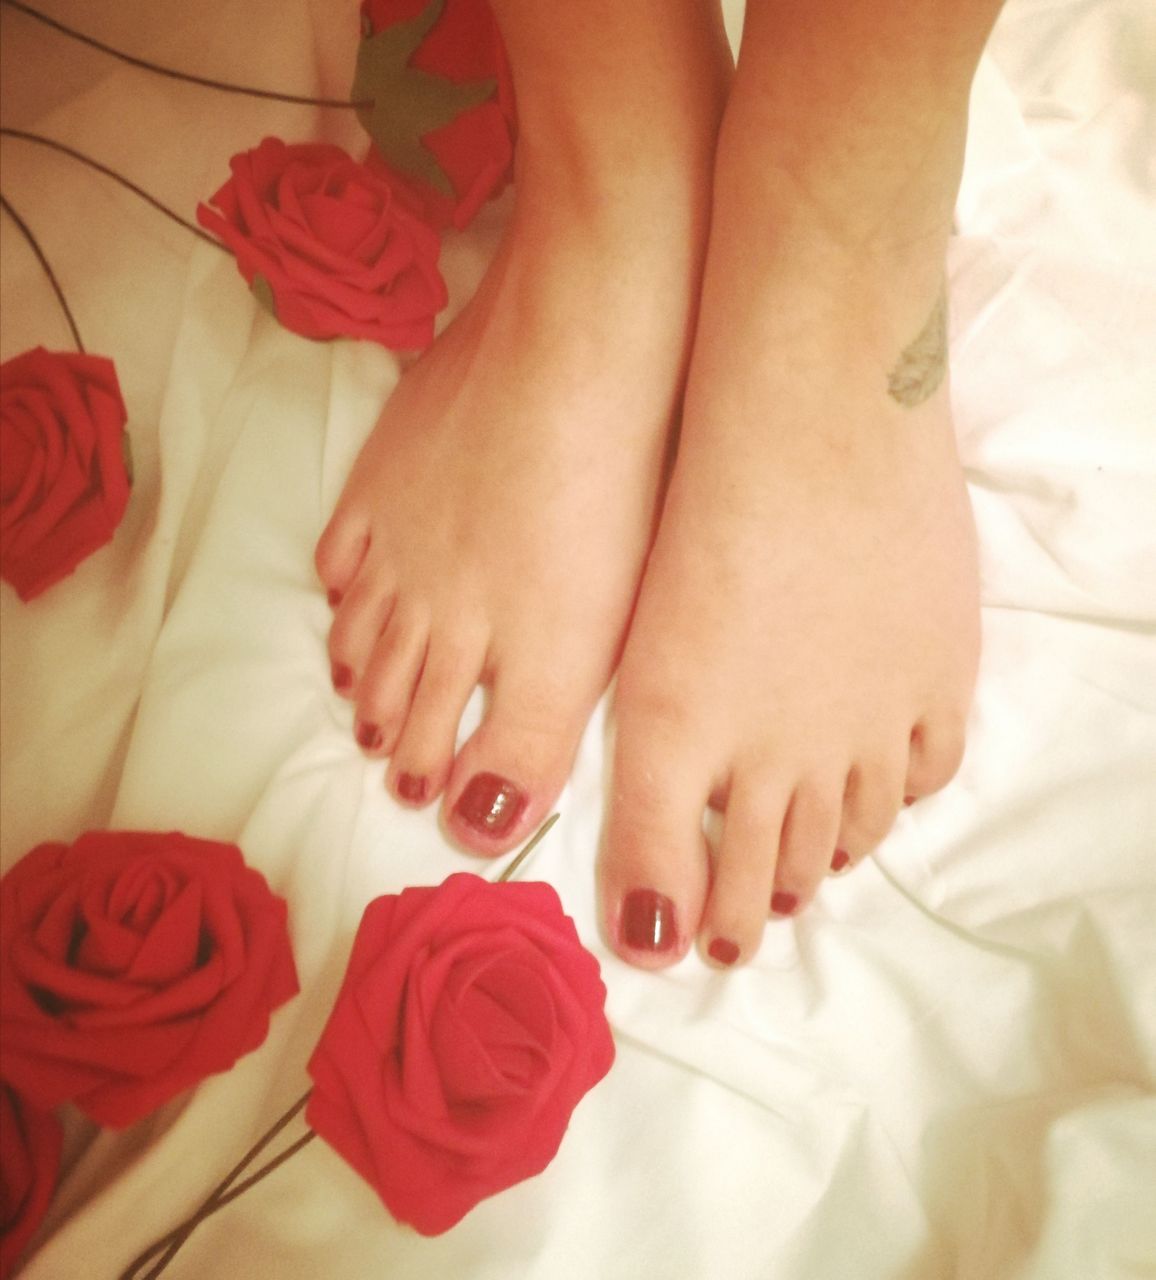 Erika Blake X Sexiest Feet On The Internet